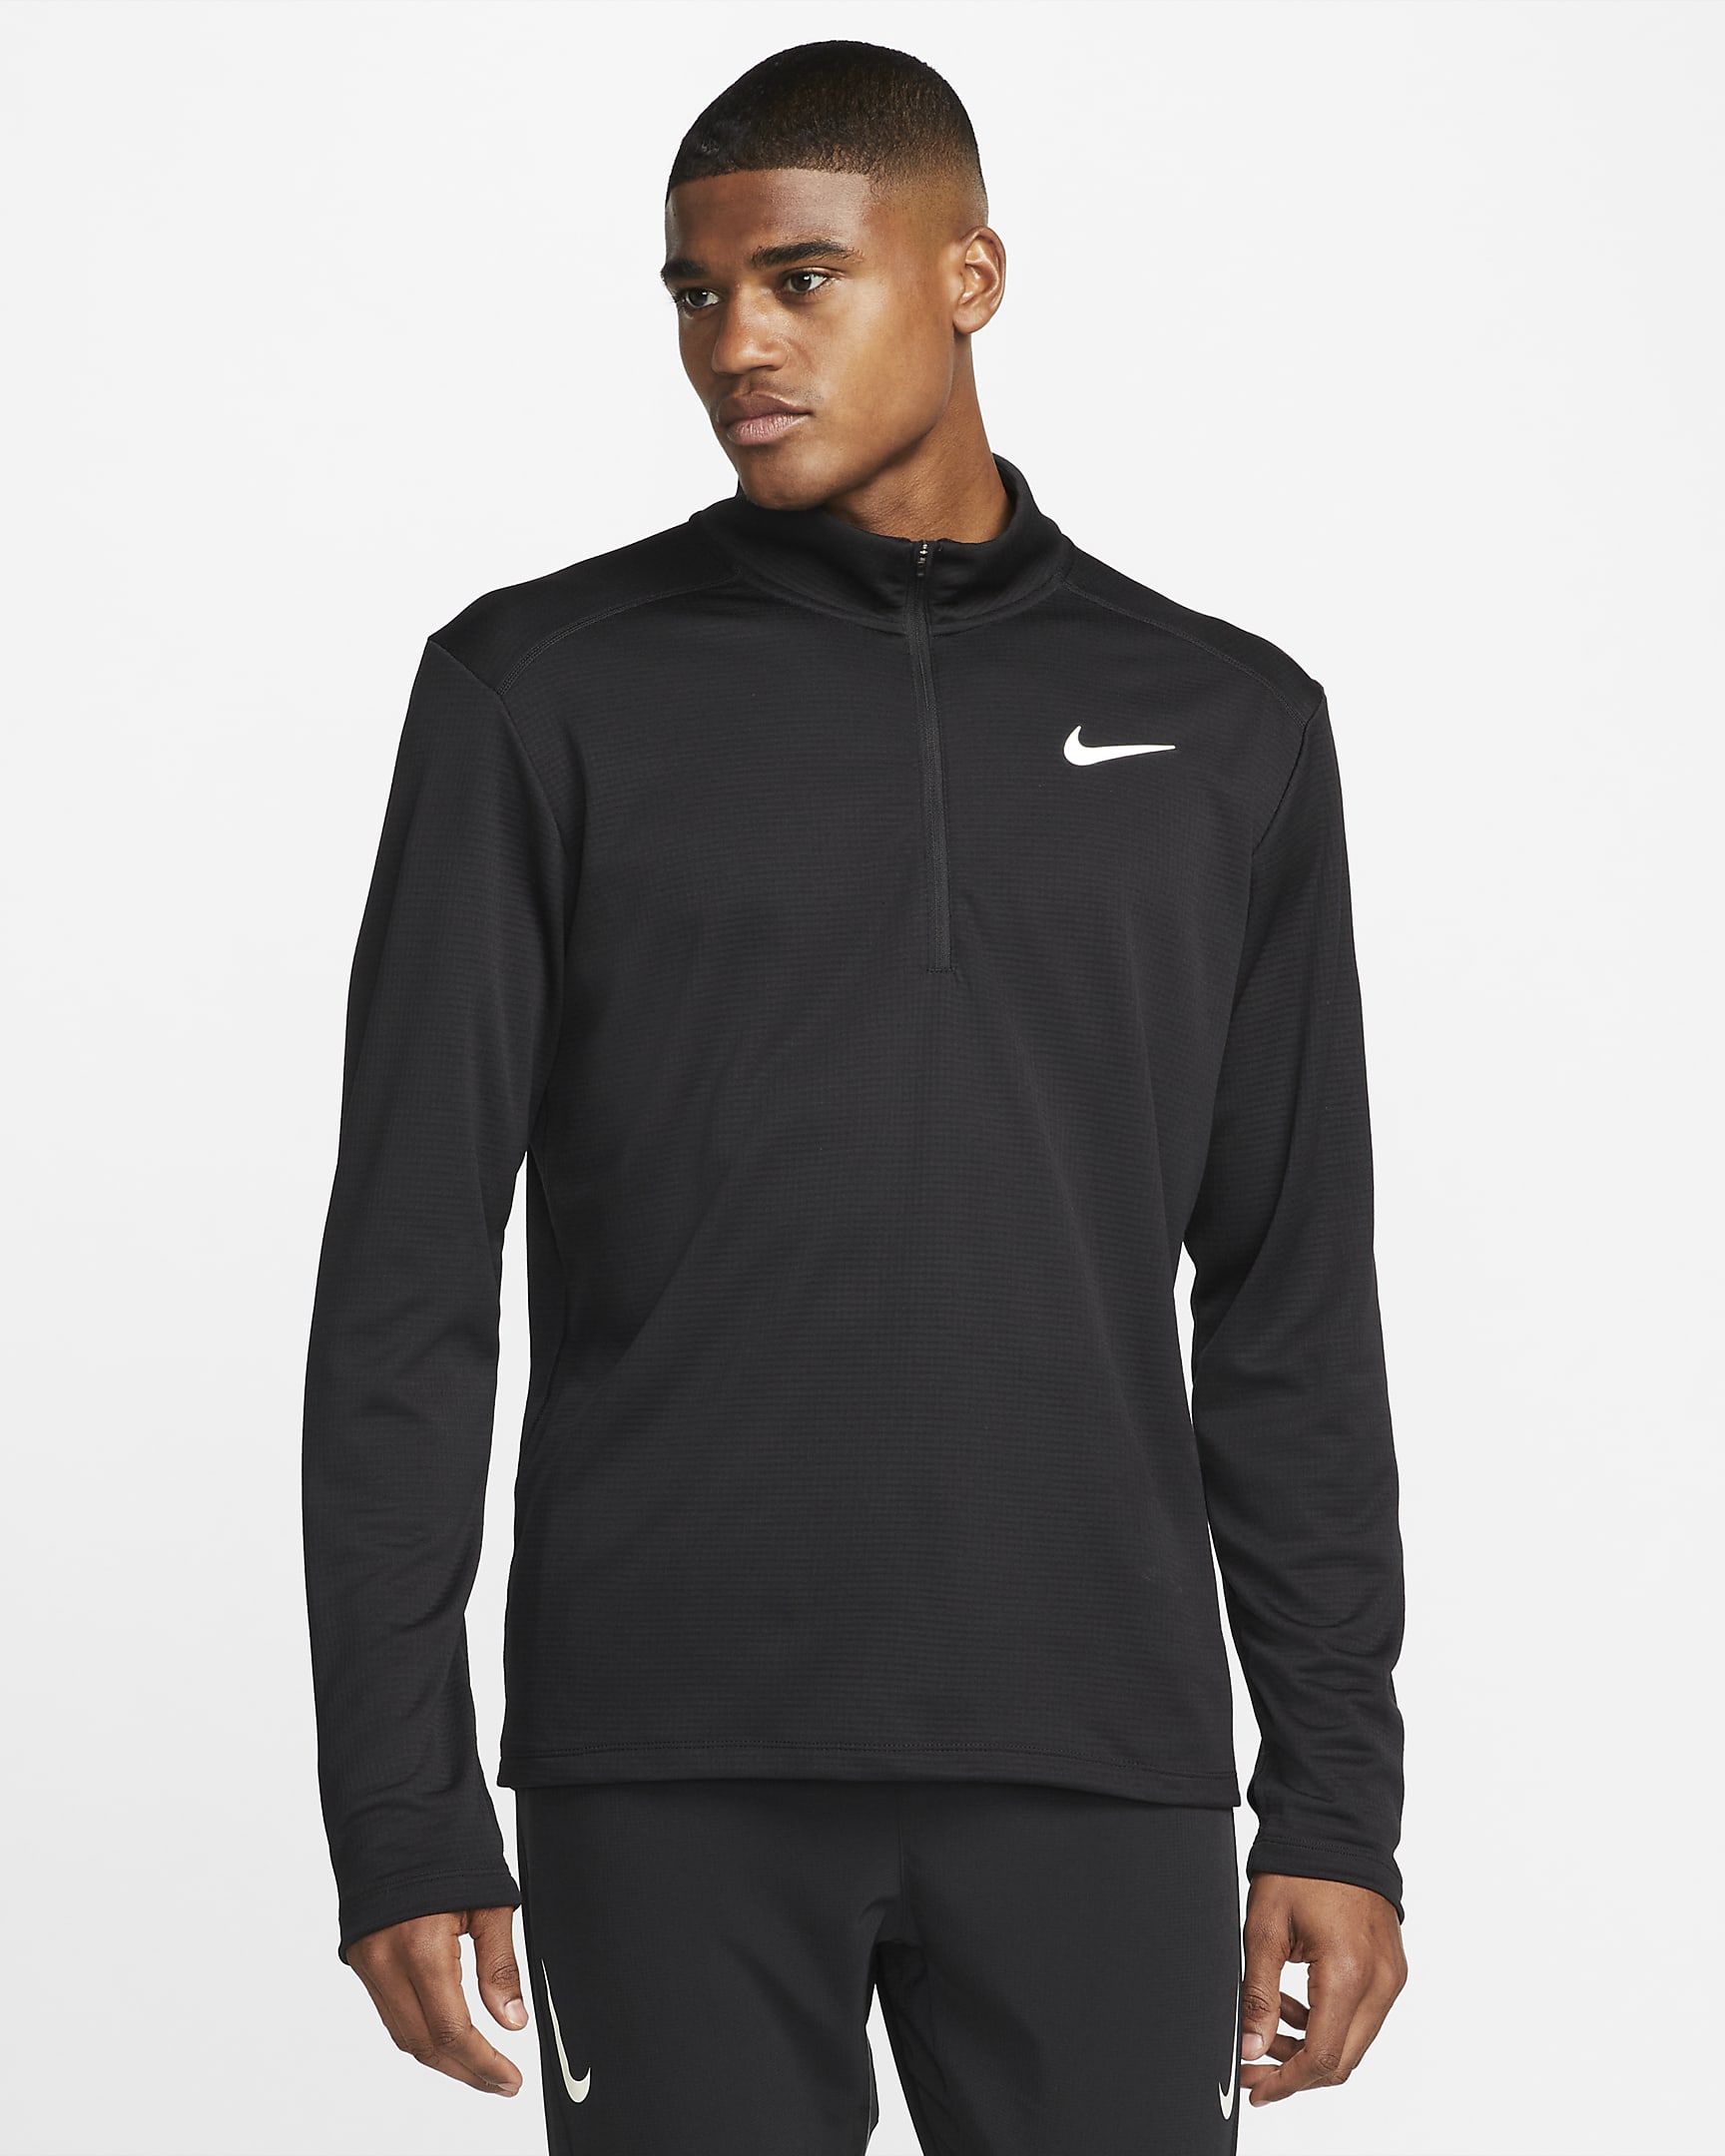 Nike Pacer Men's 1/2-Zip Running Top - Black/Black